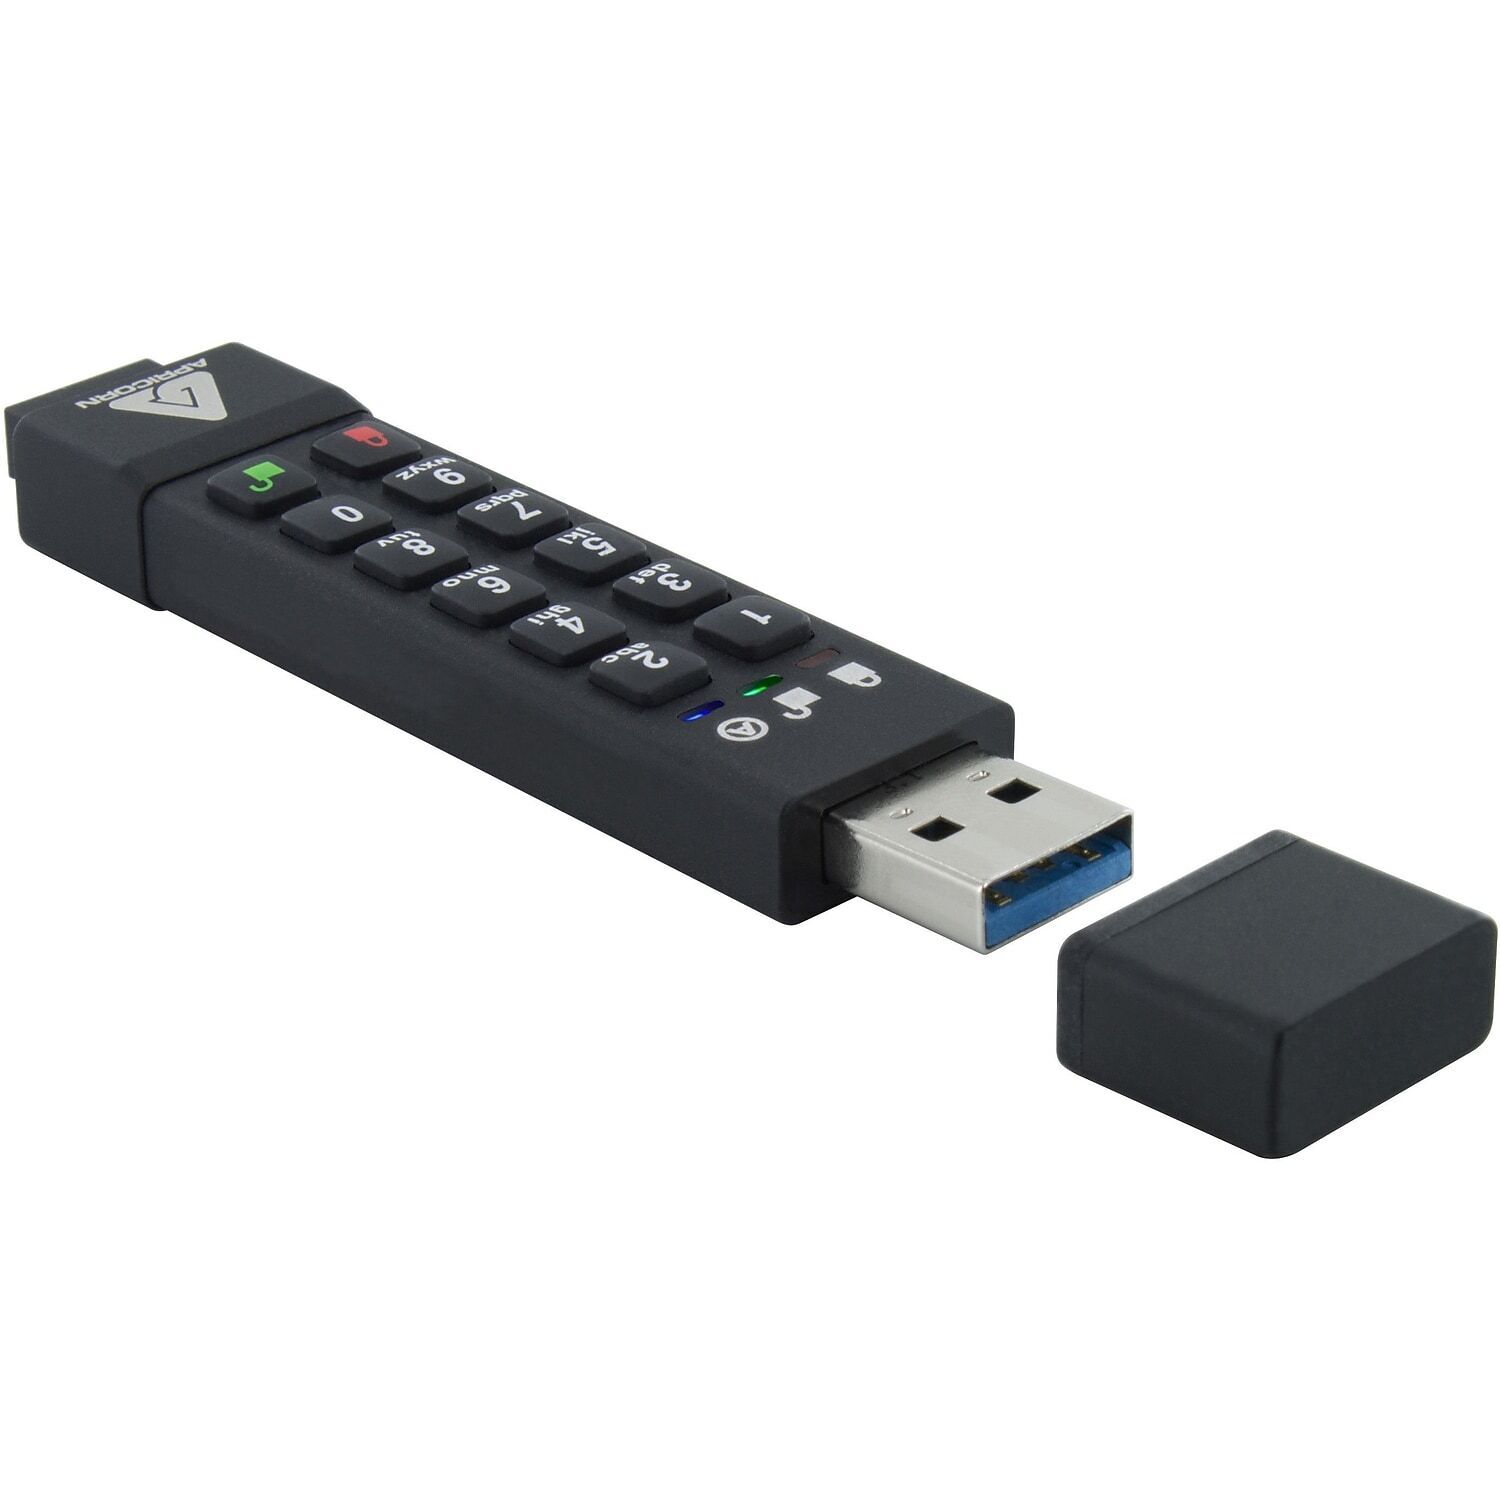 Apricorn Aegis Secure Key 3z 32GB USB 3.0 Flash Drive ASK3Z-32GB